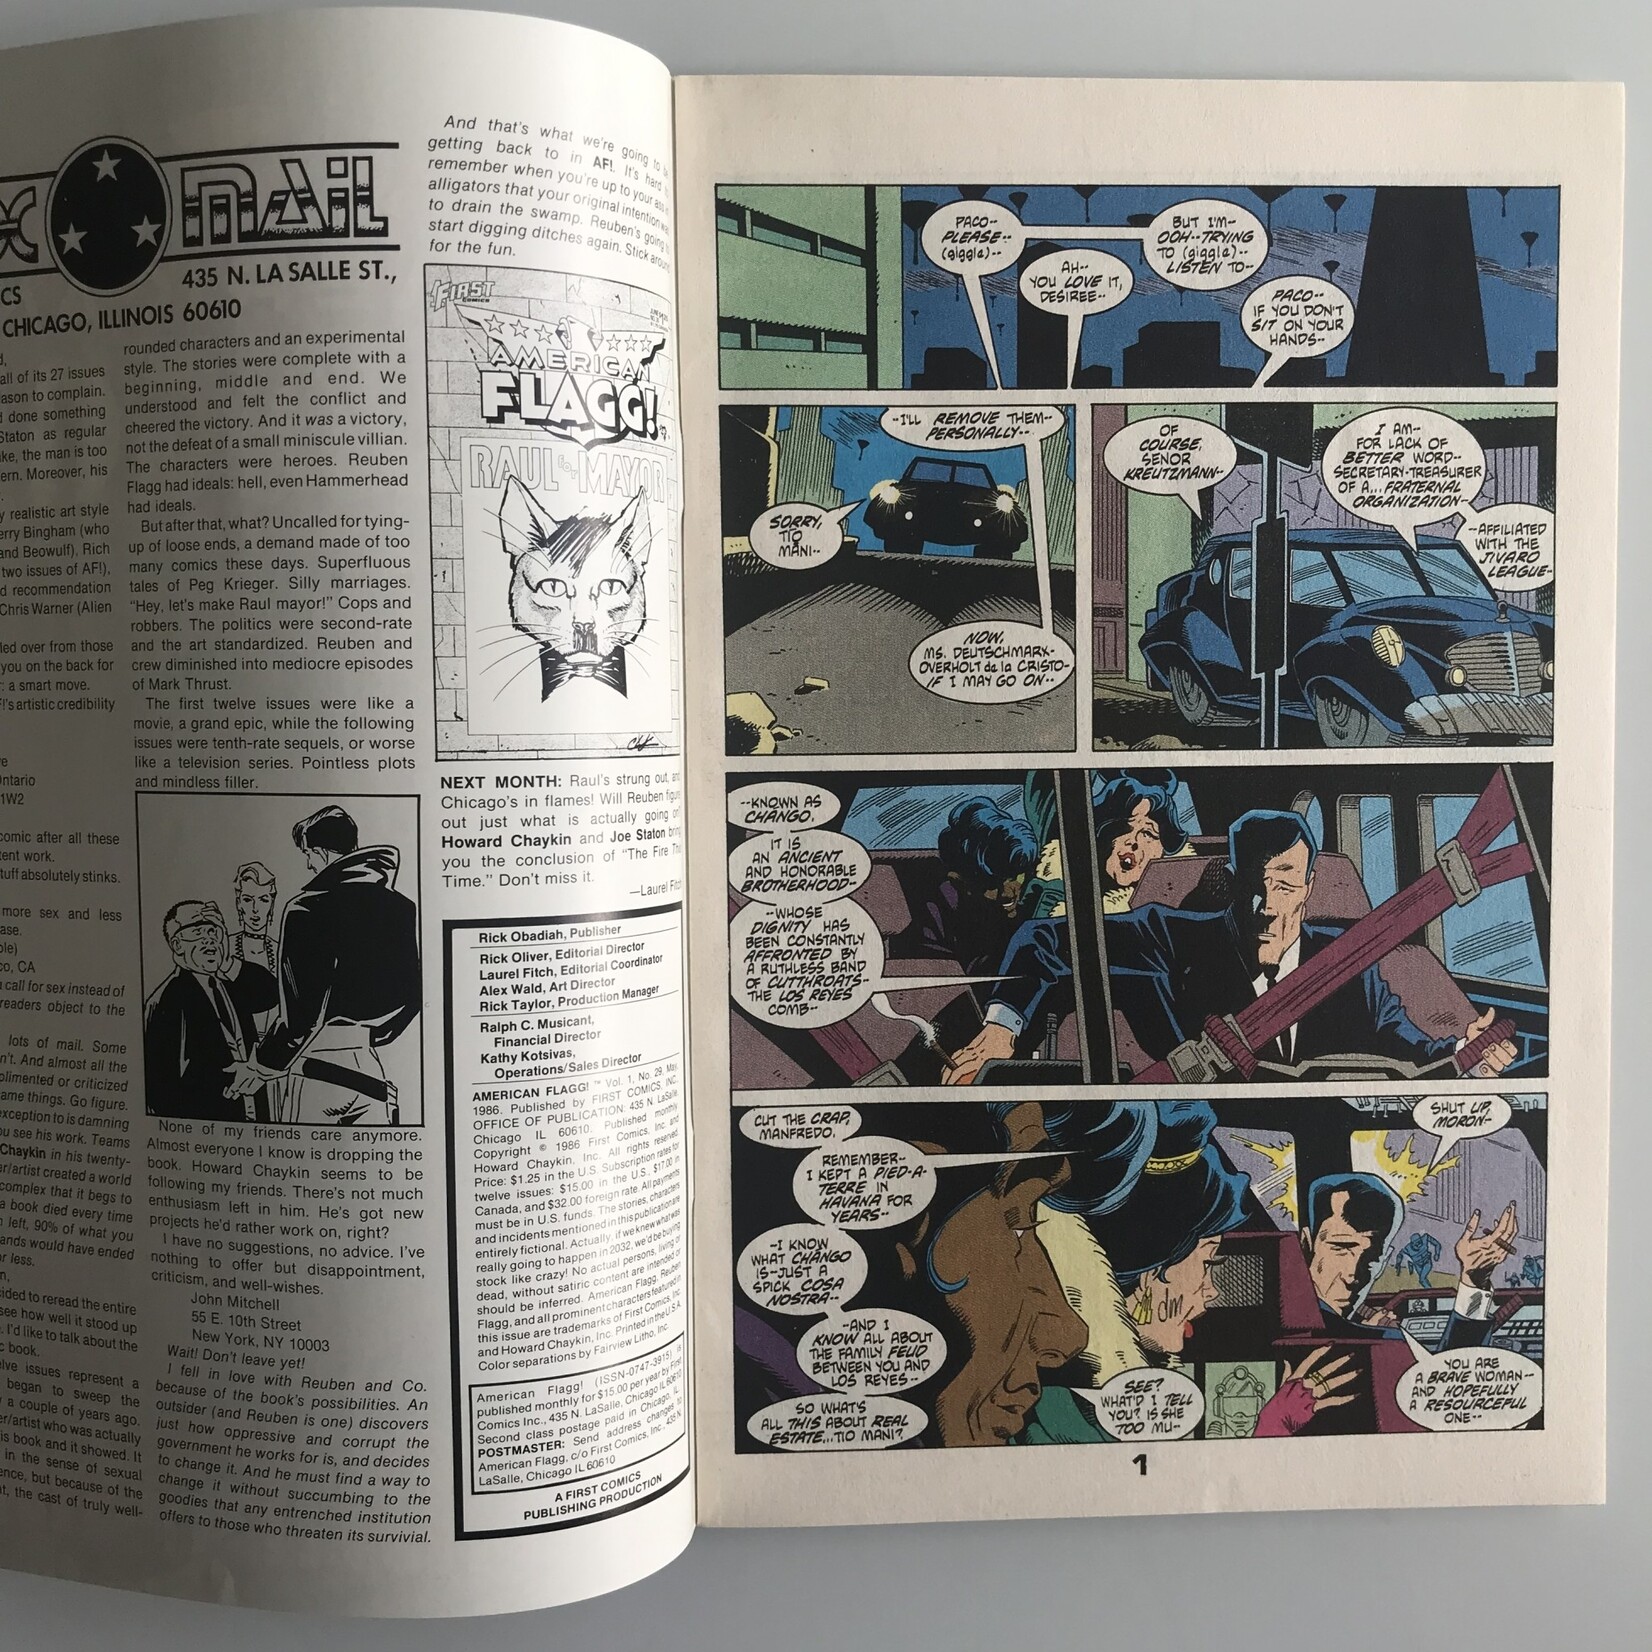 American Flagg! - Vol. 1 #29 May 1986 - Comic Book